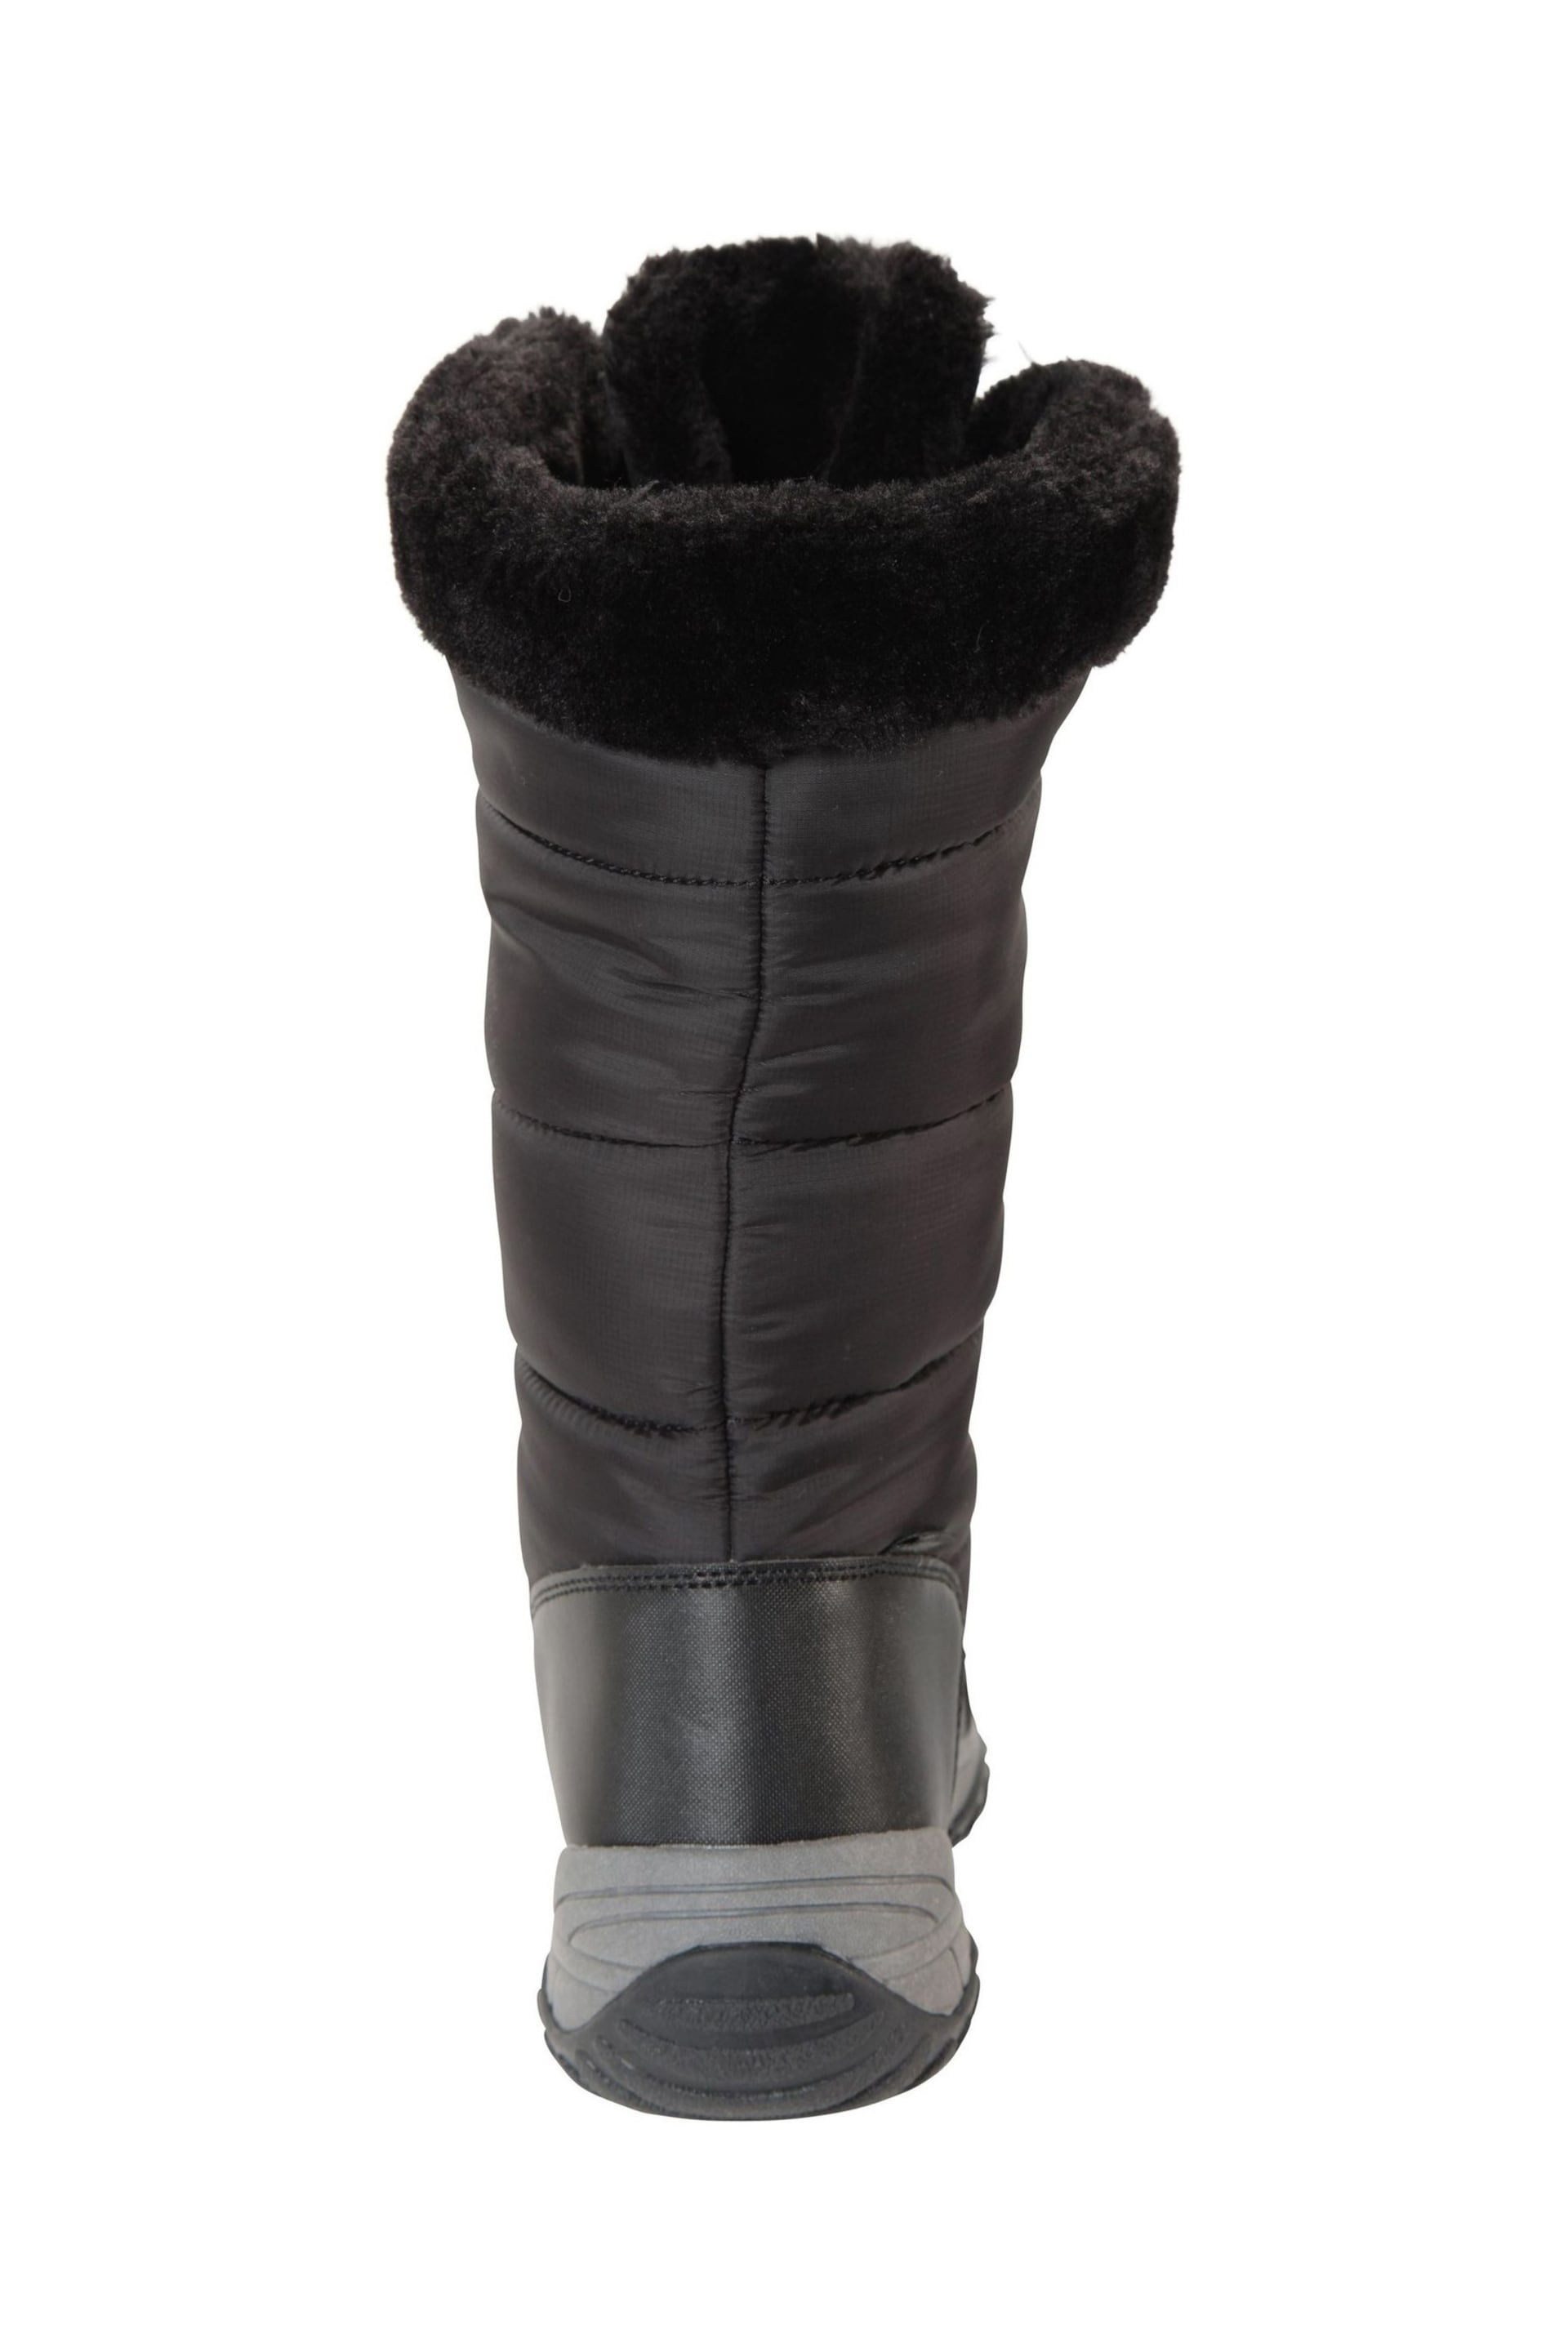 Mountain Warehouse Black Snowflake Womens Long Snow Walking Boots - Image 4 of 5